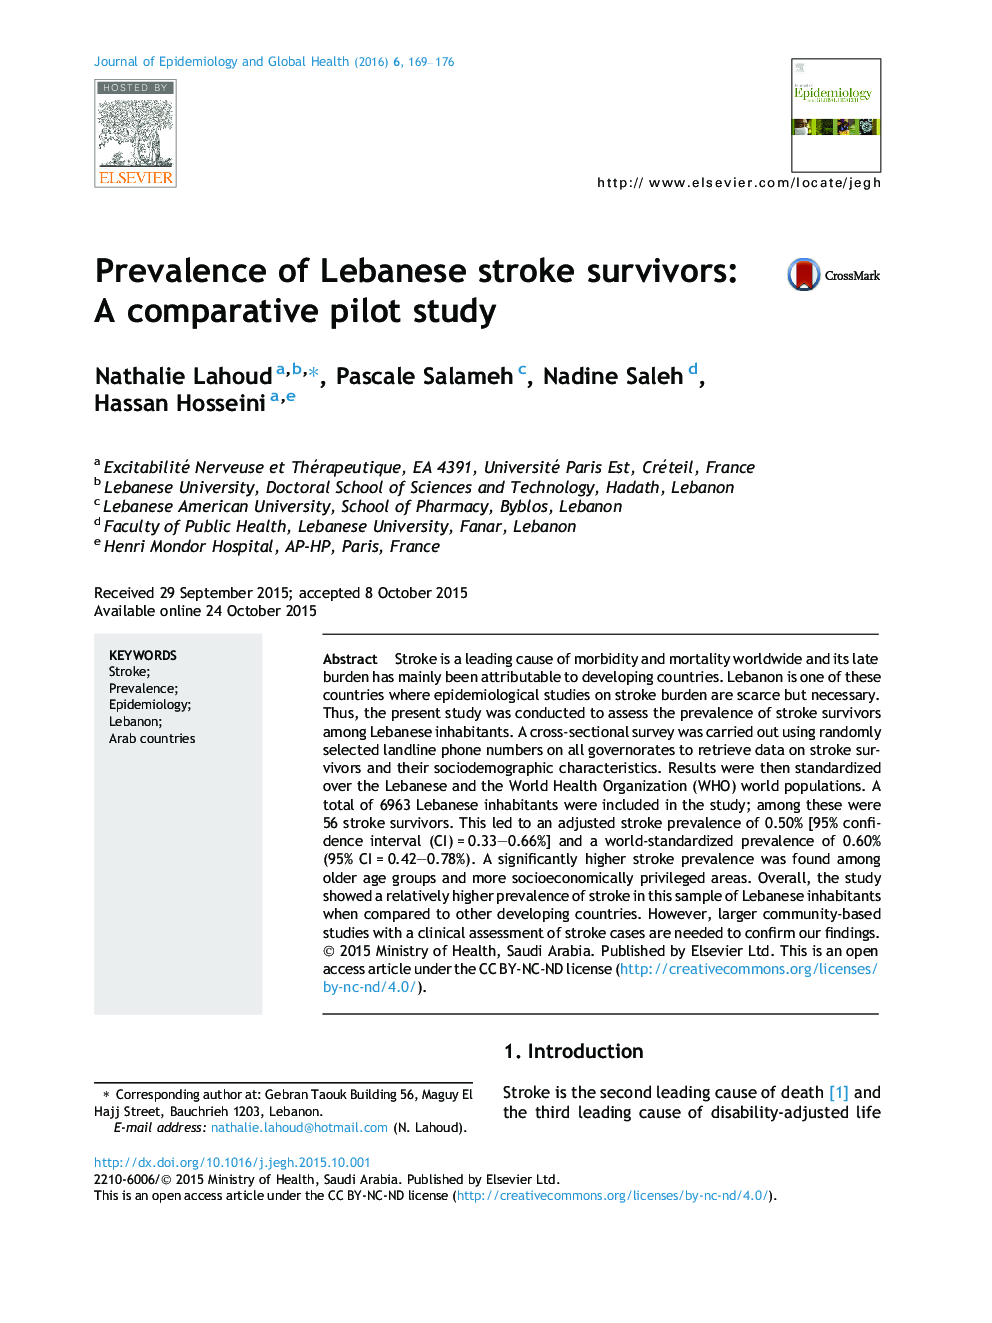 Prevalence of Lebanese stroke survivors: A comparative pilot study